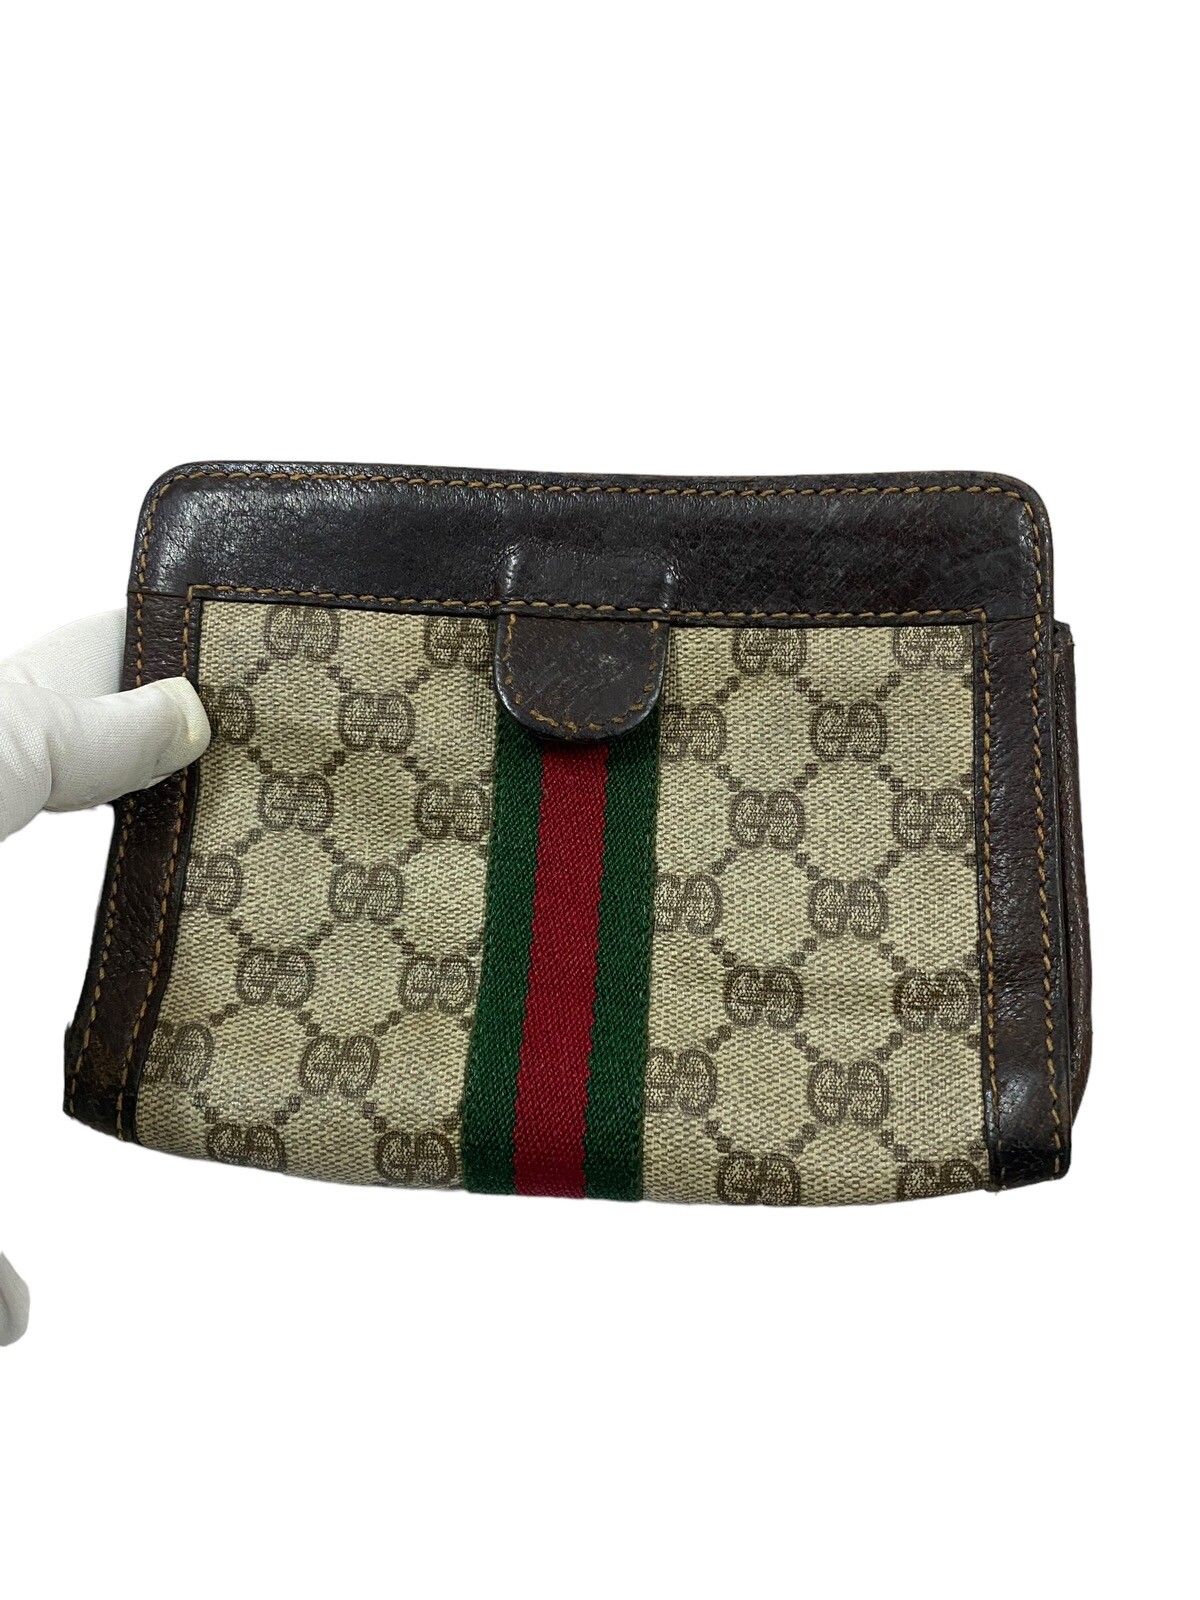 Vtg🔥Gucci Stripe Monogram Clutch Bag Made In Italy - 8